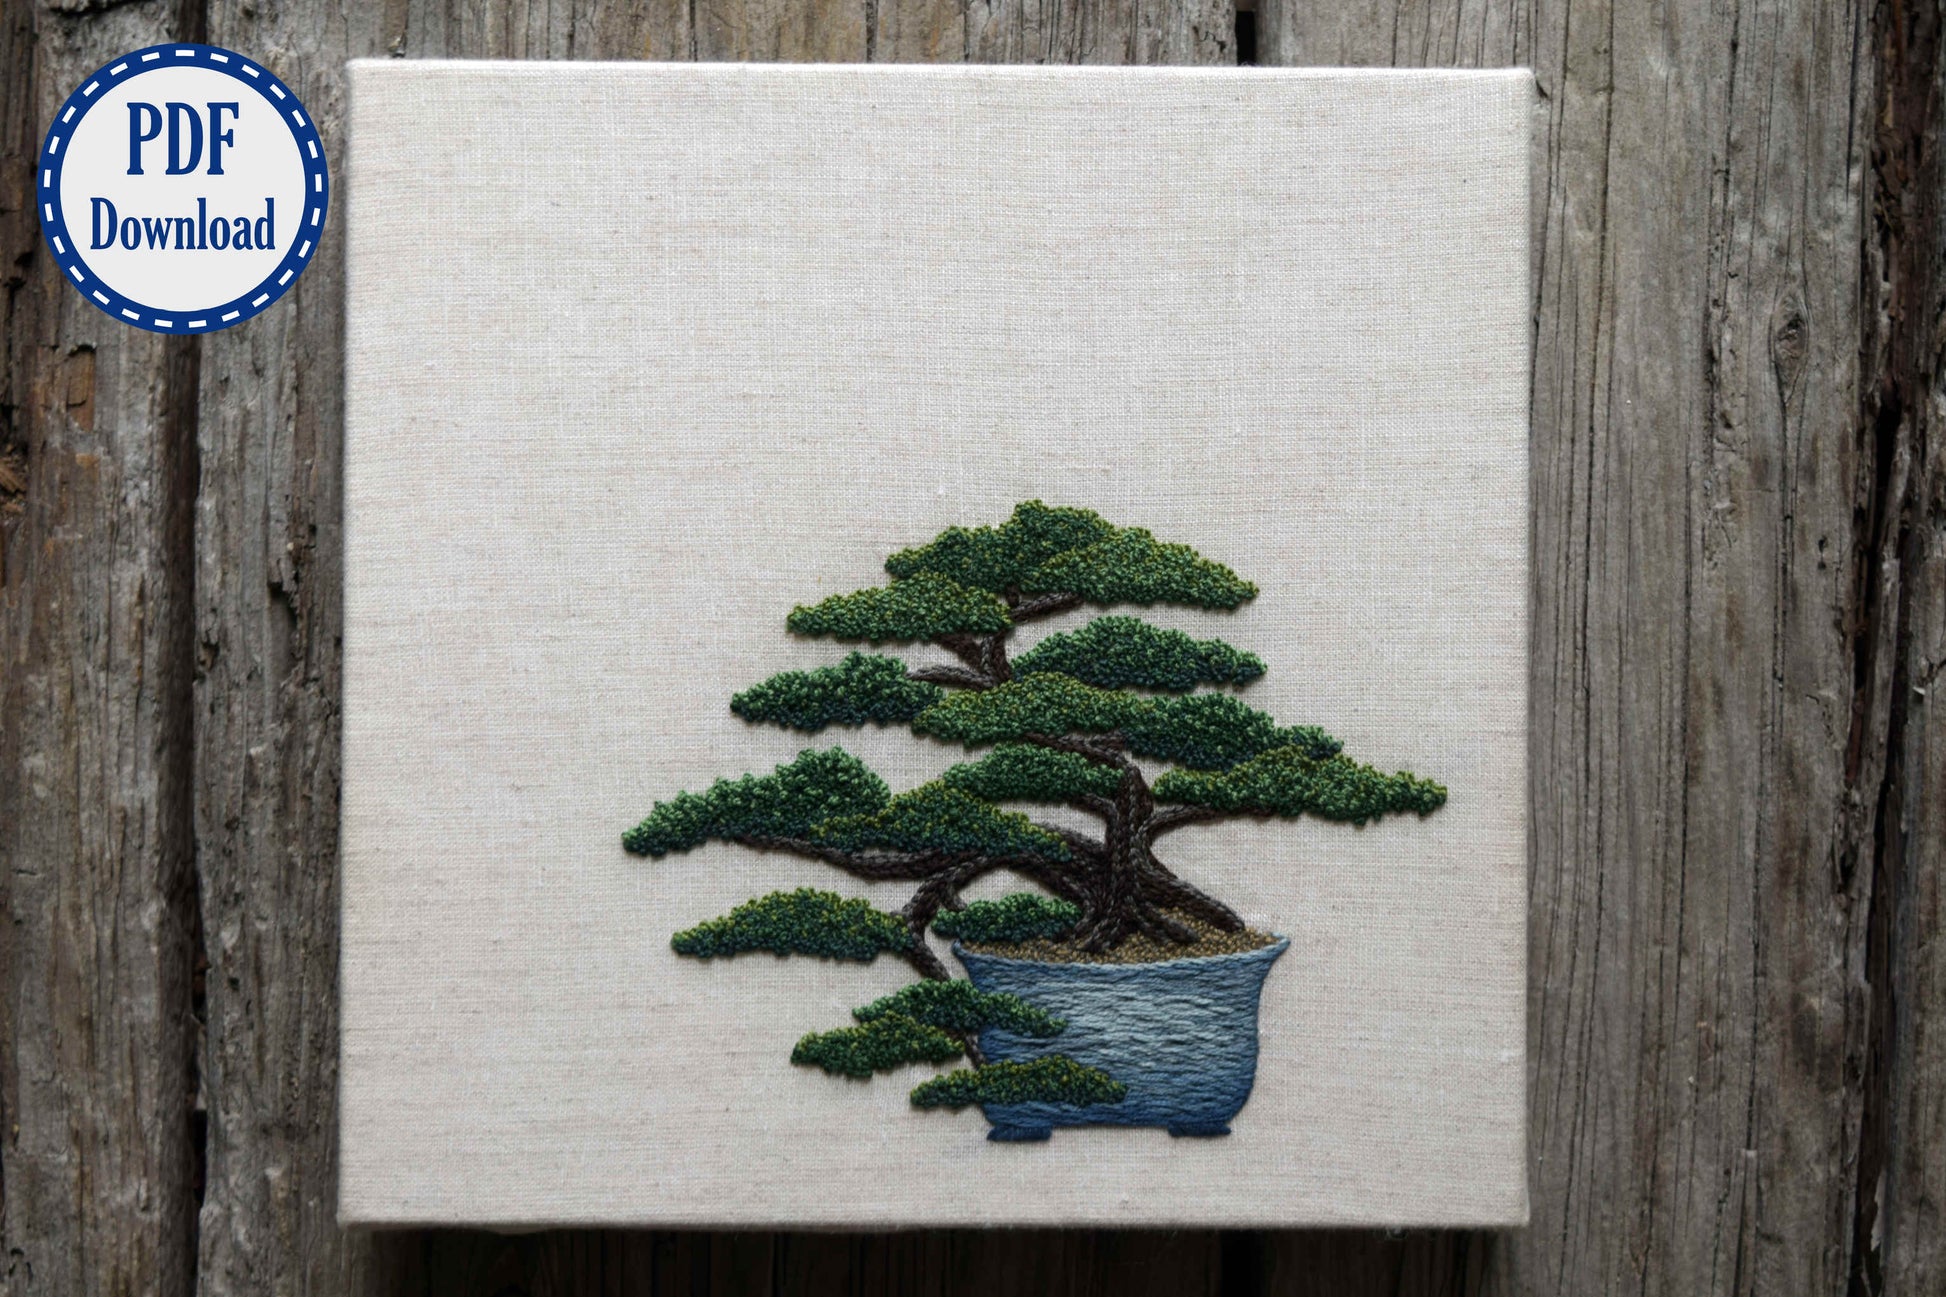 Japanese bonsai tree embroidery pattern. PDF download badge in corner.